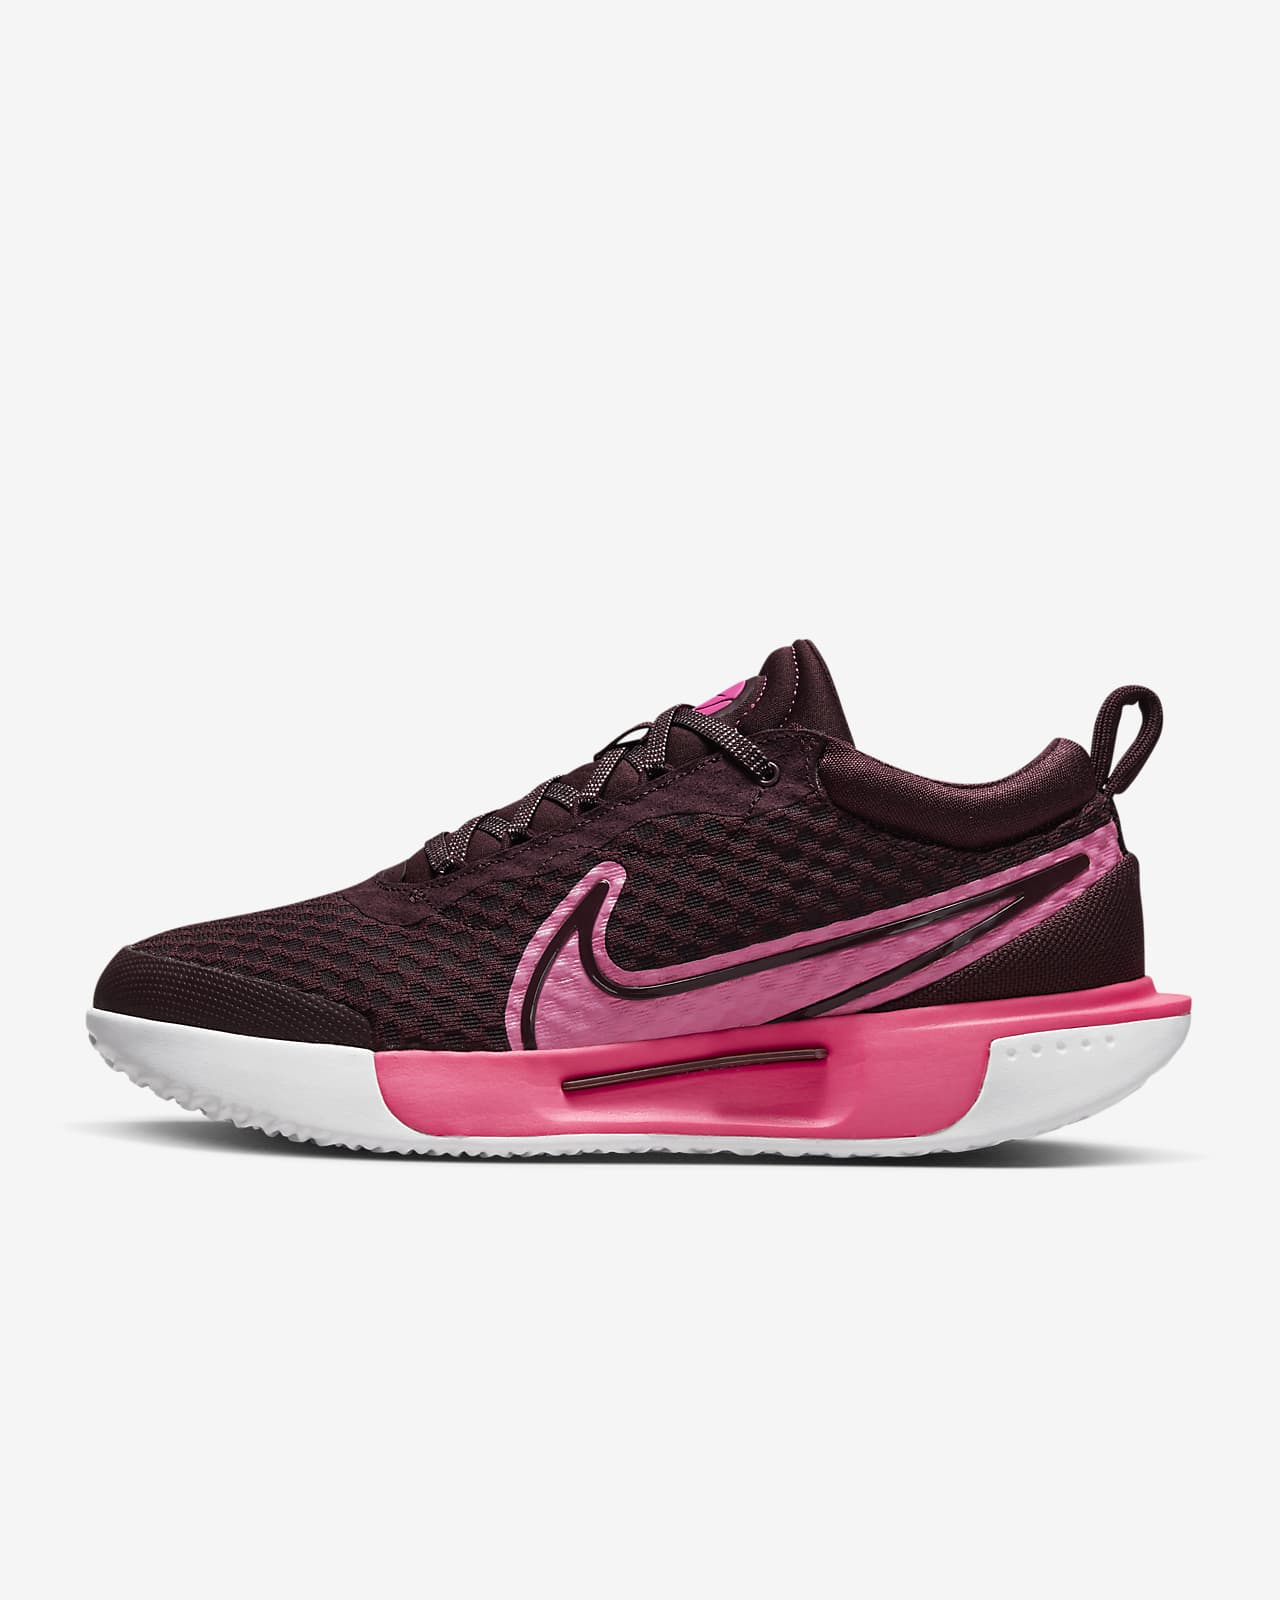 NikeCourt Zoom Pro Premium Women's Hard Court Tennis Shoes